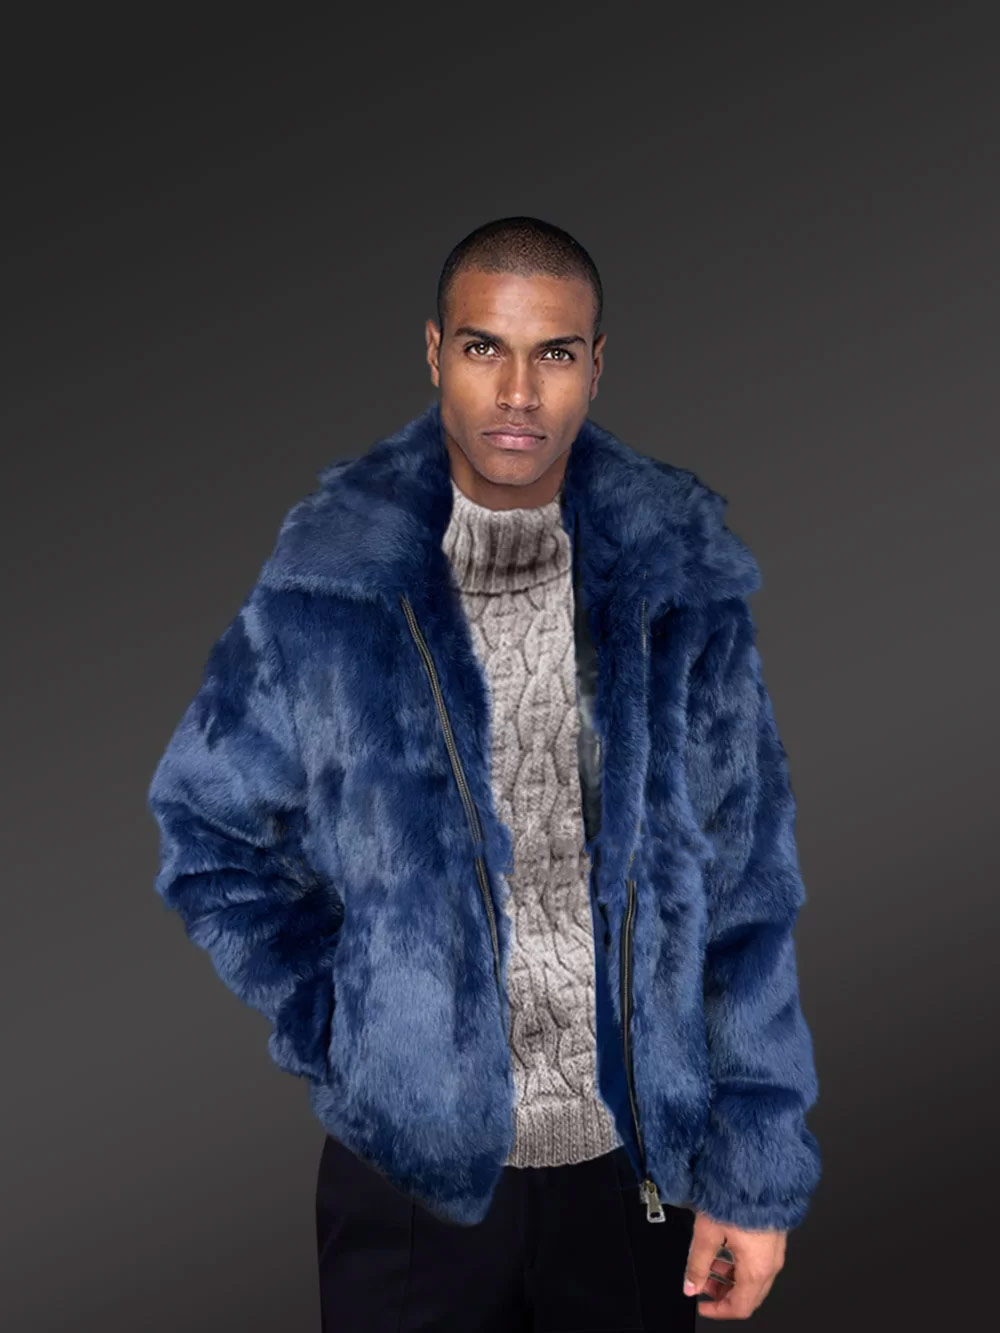 Authentic fur coats in Elegant Navy shade for Men